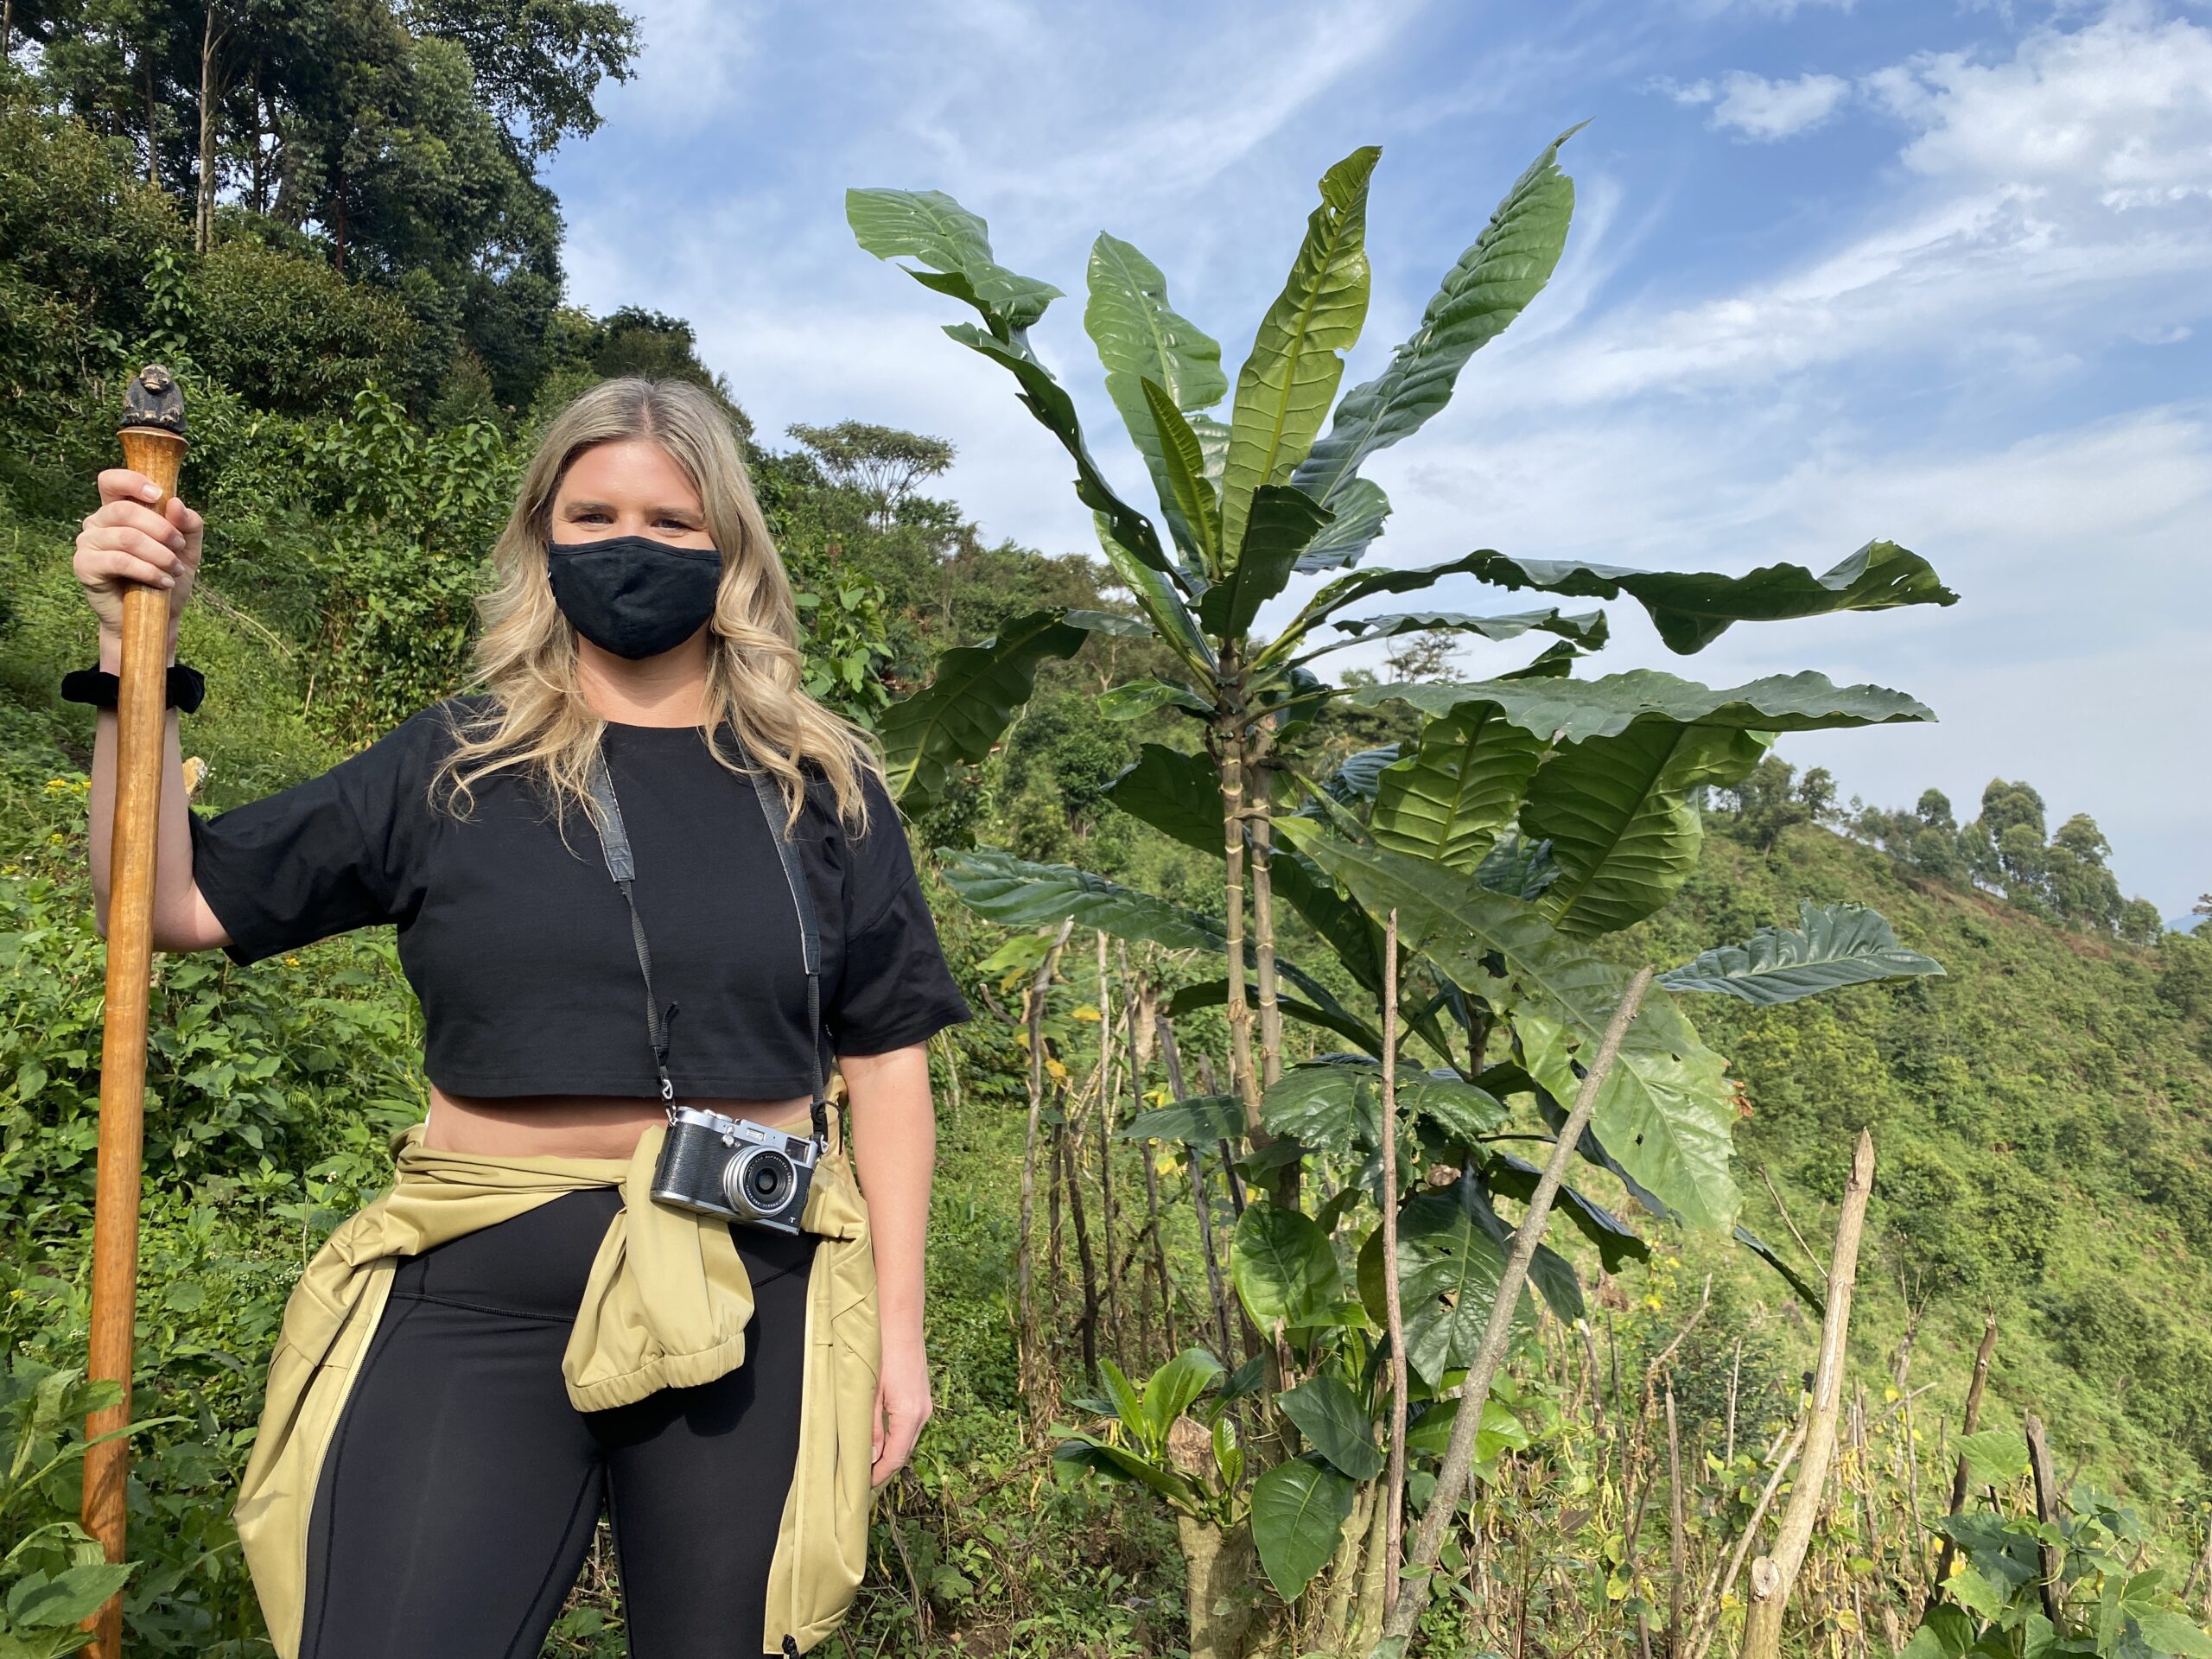 Alicia-Rae gorilla trekking in Uganda during the pandemic